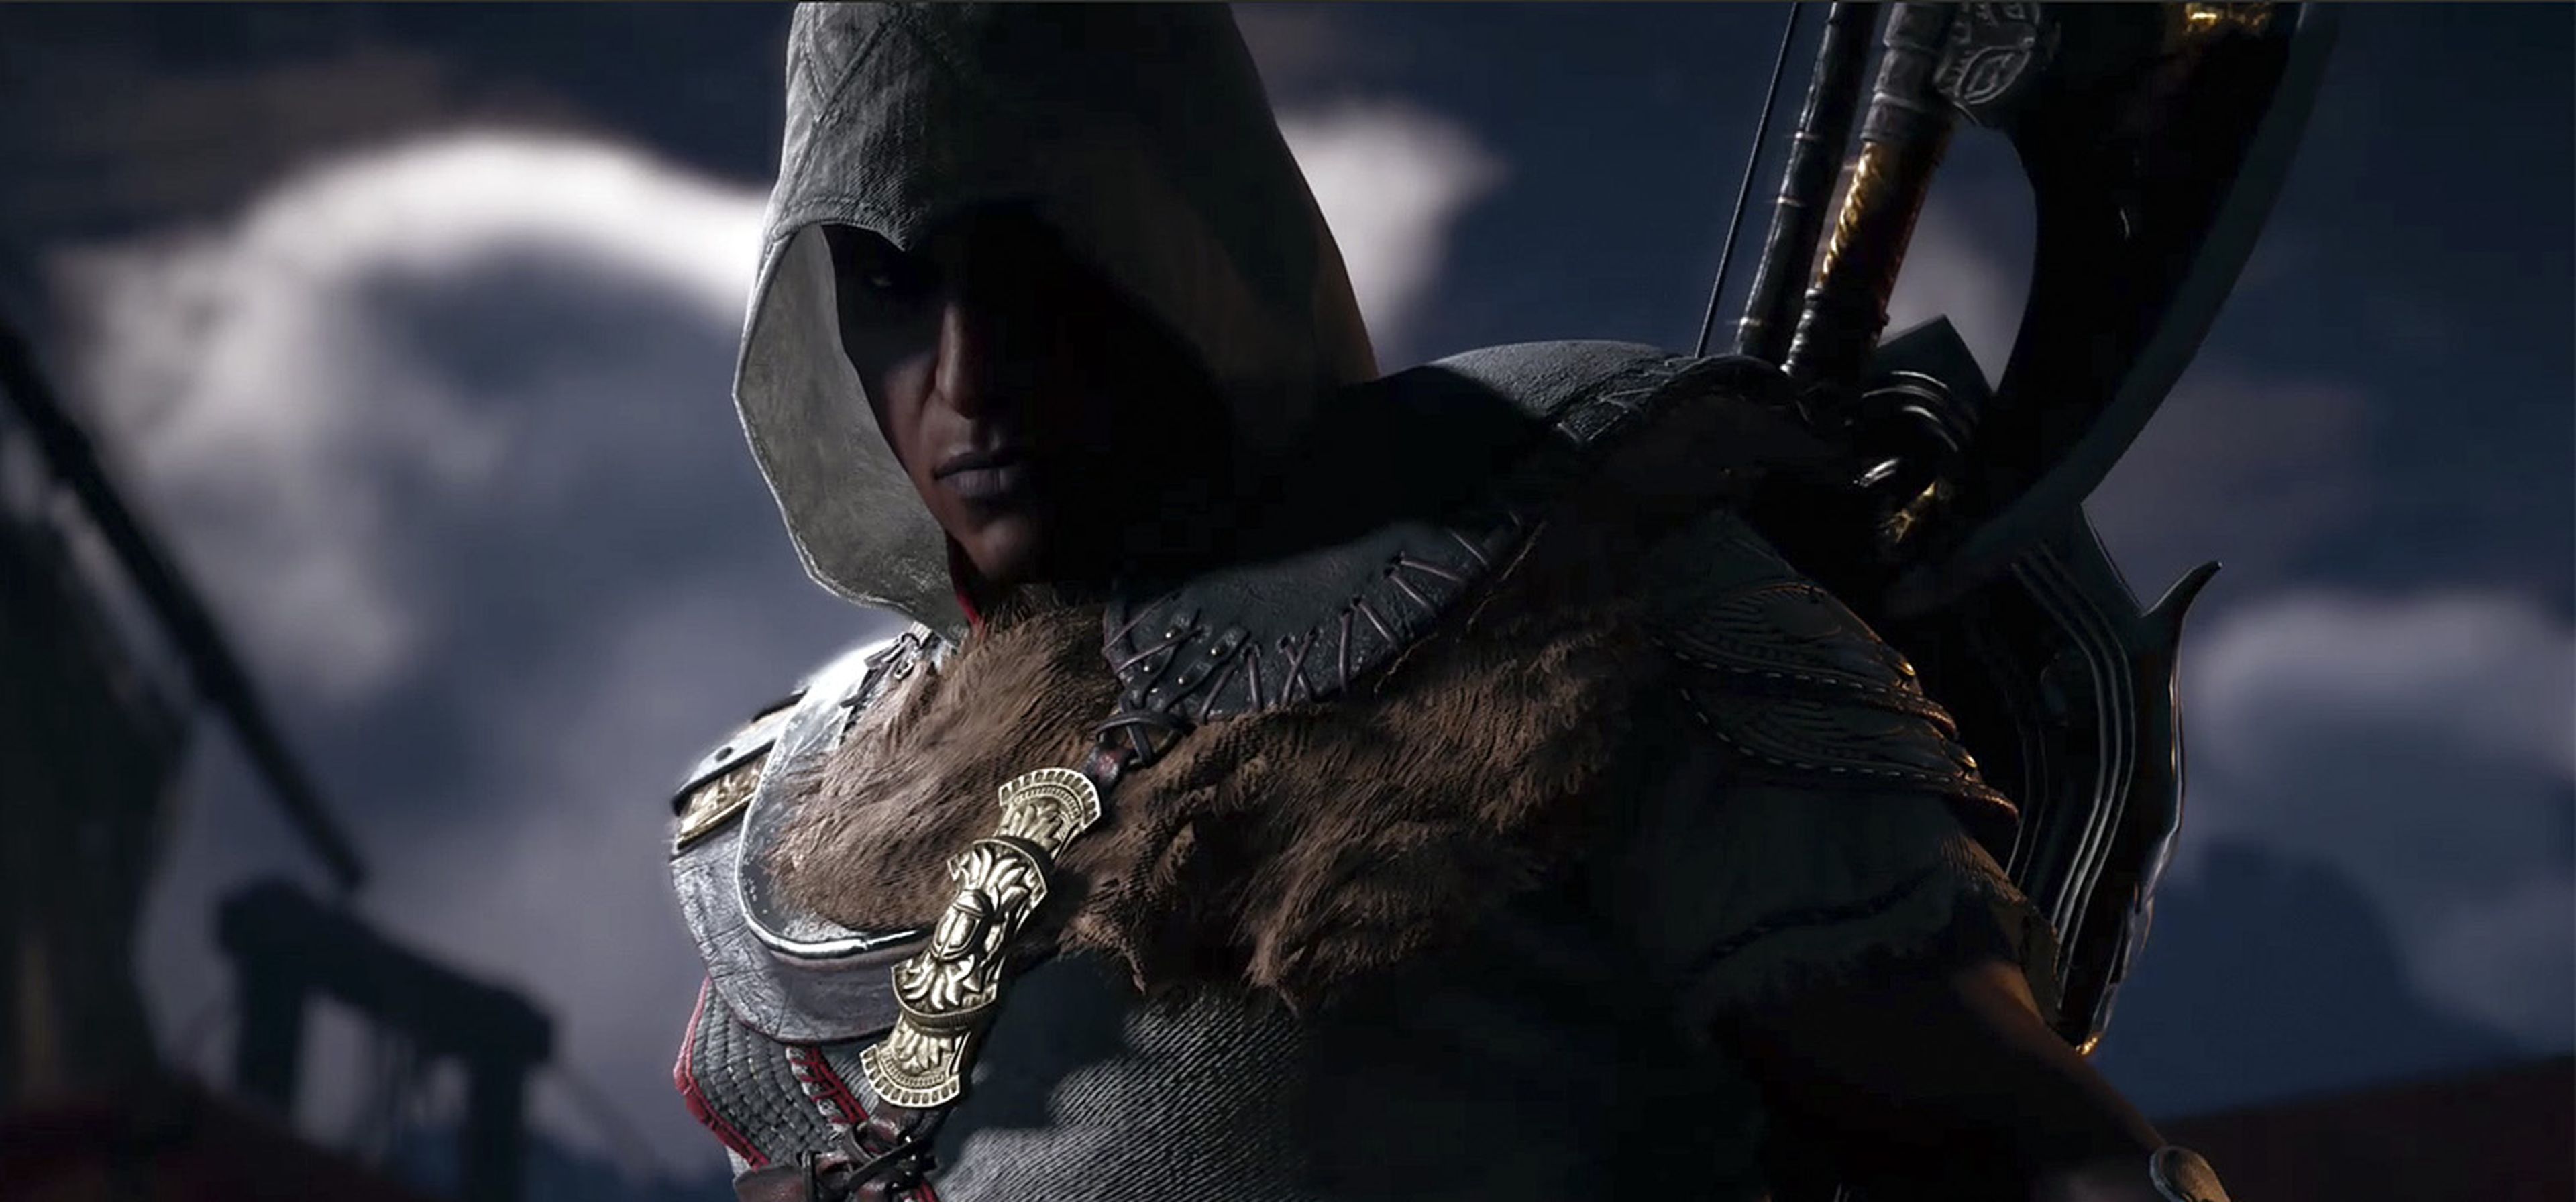 Assassin's Creed Origins: The Hidden Ones DLC Review